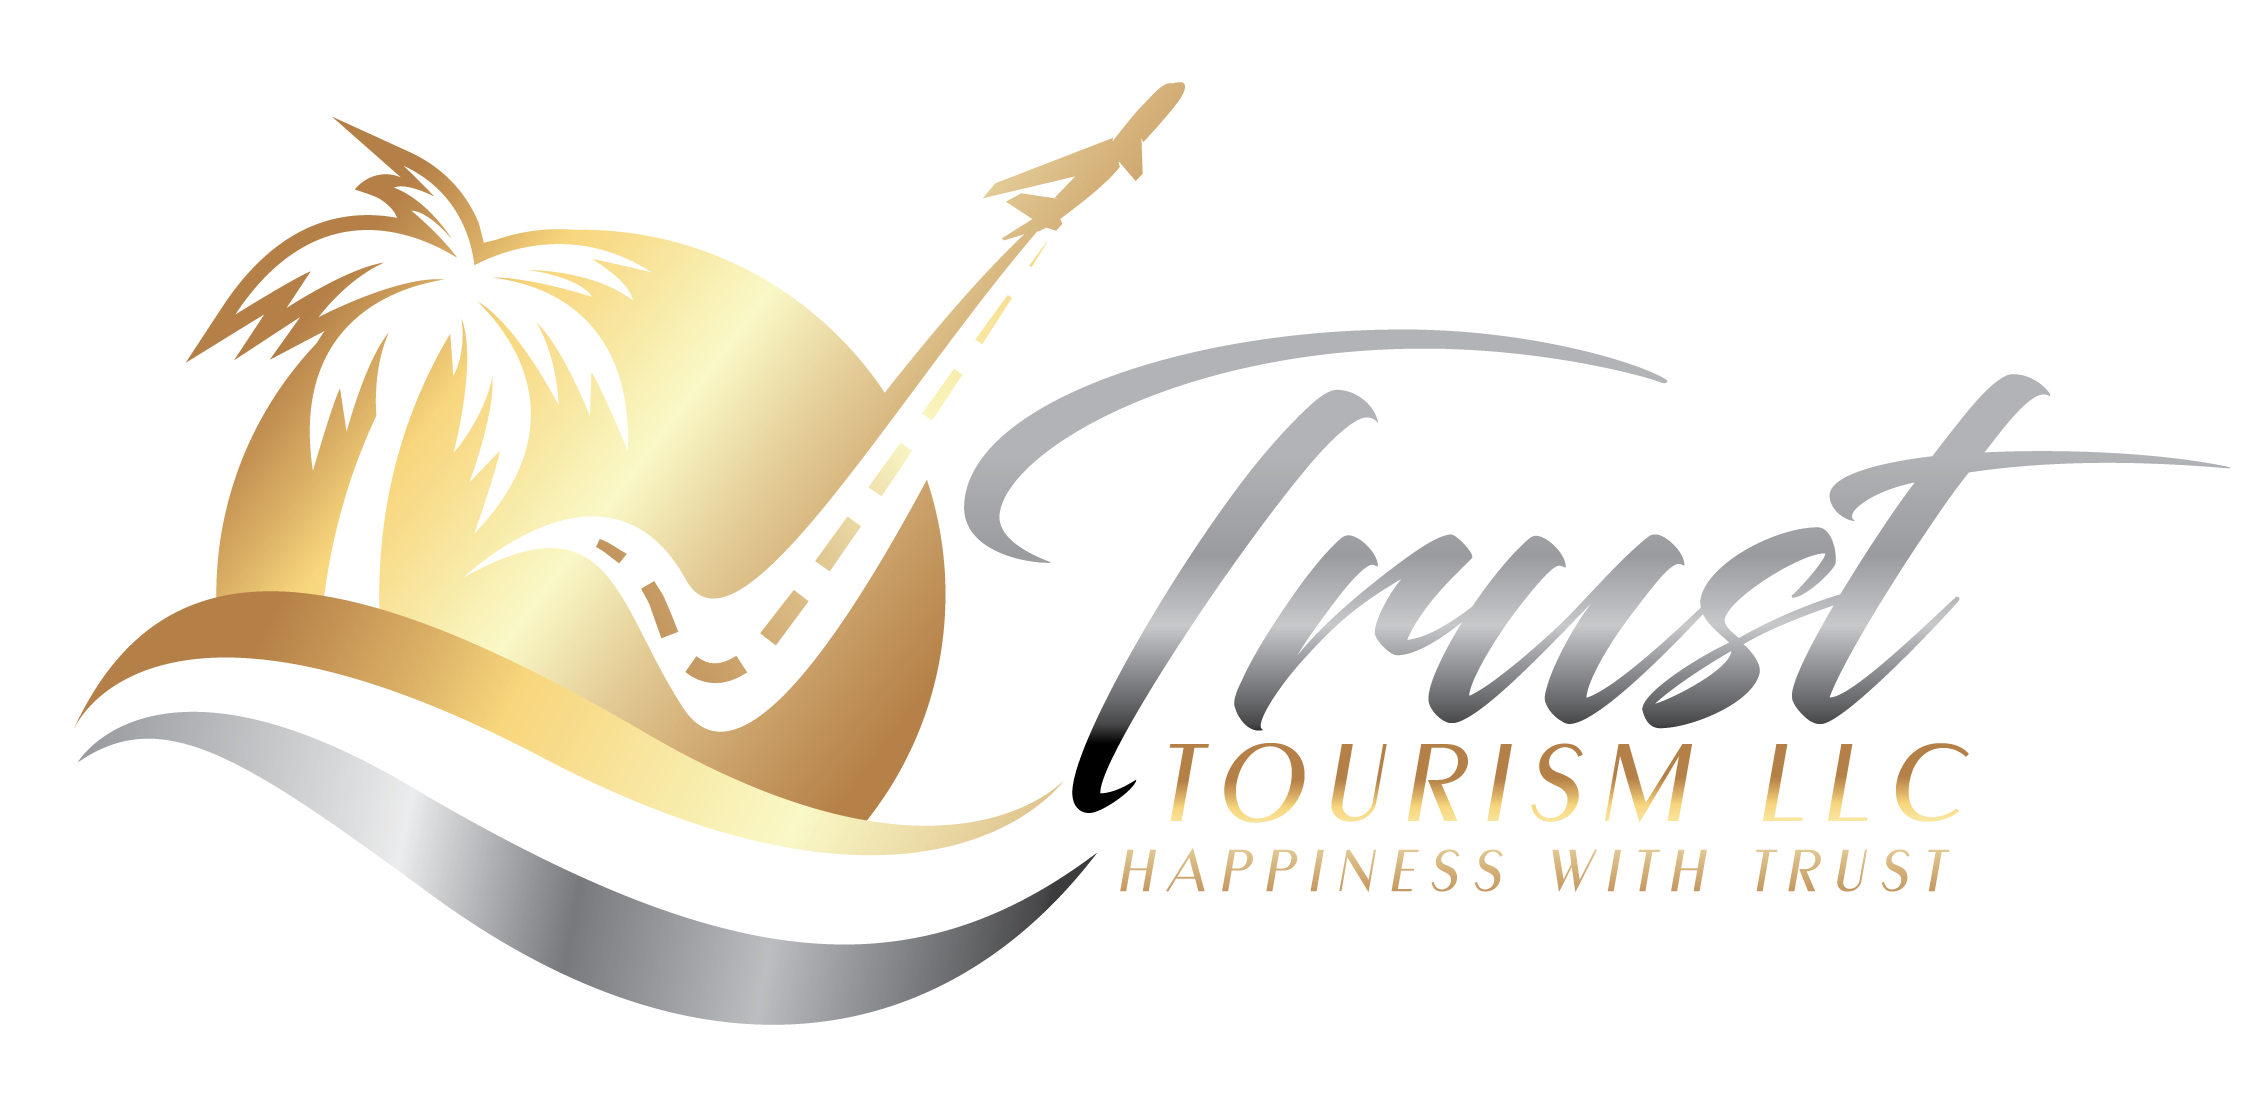 Trust Tourism LLC